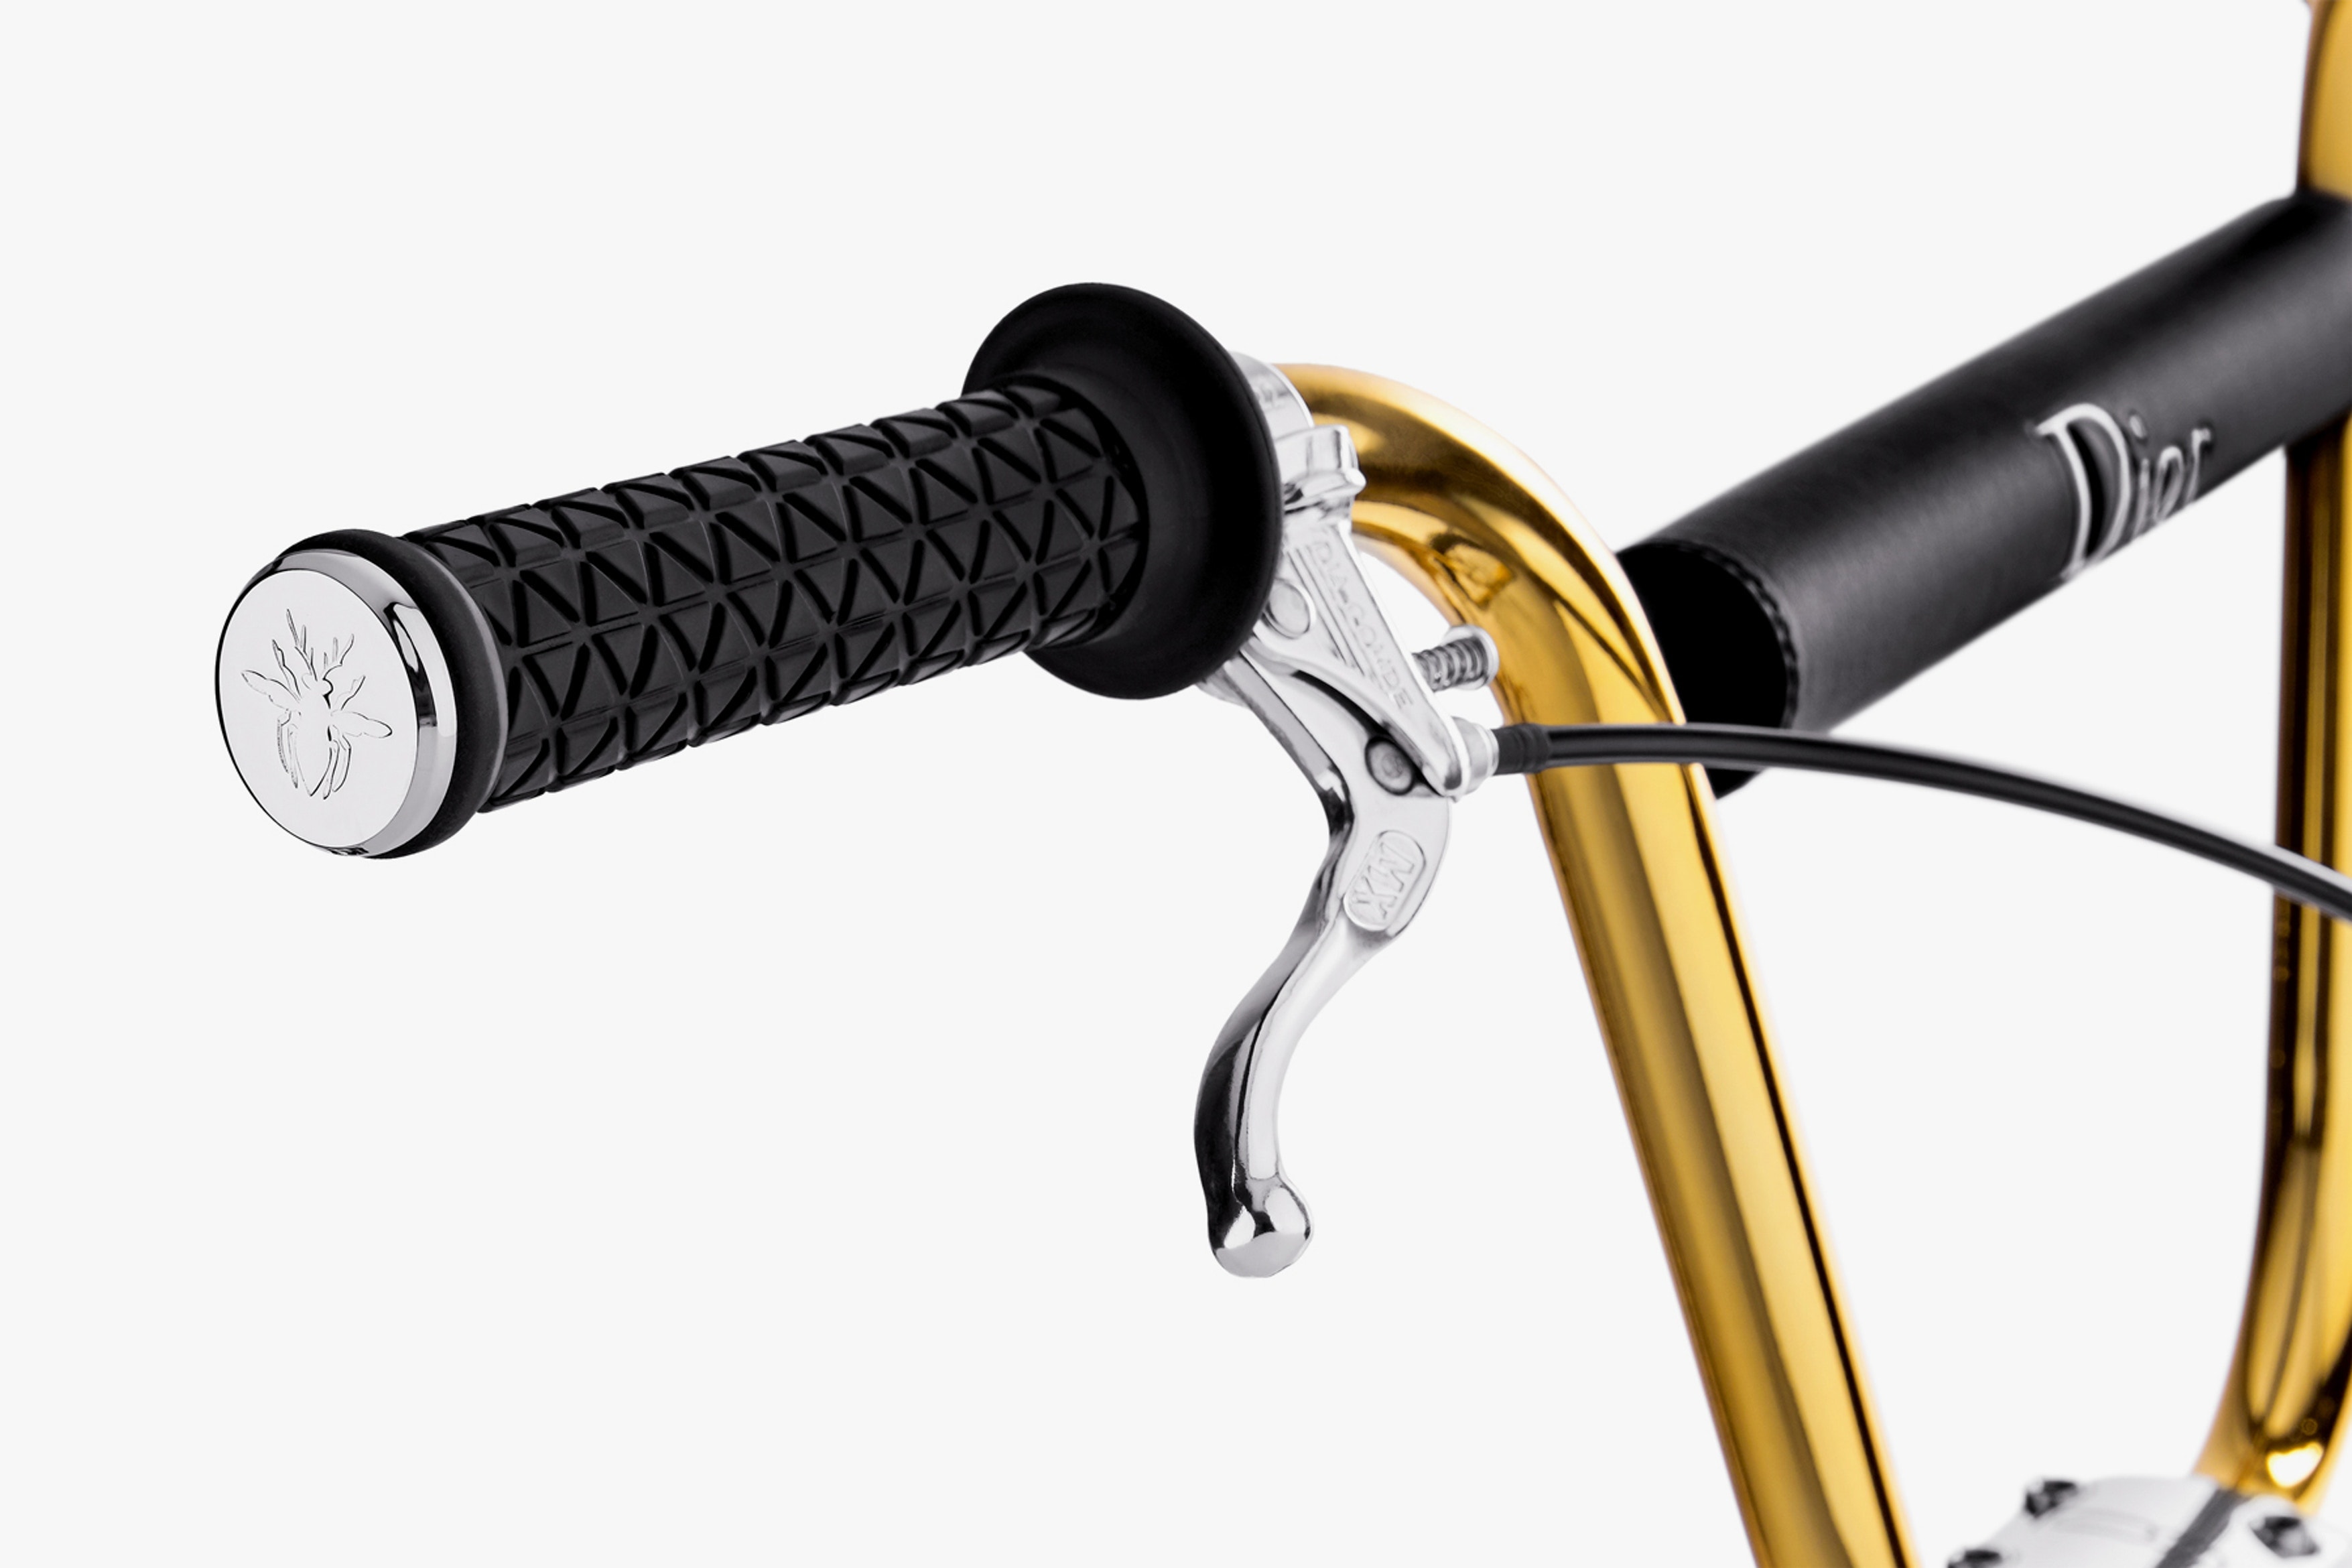 Dior 與 Bogarde 推出超限量 100 部金色 BMX